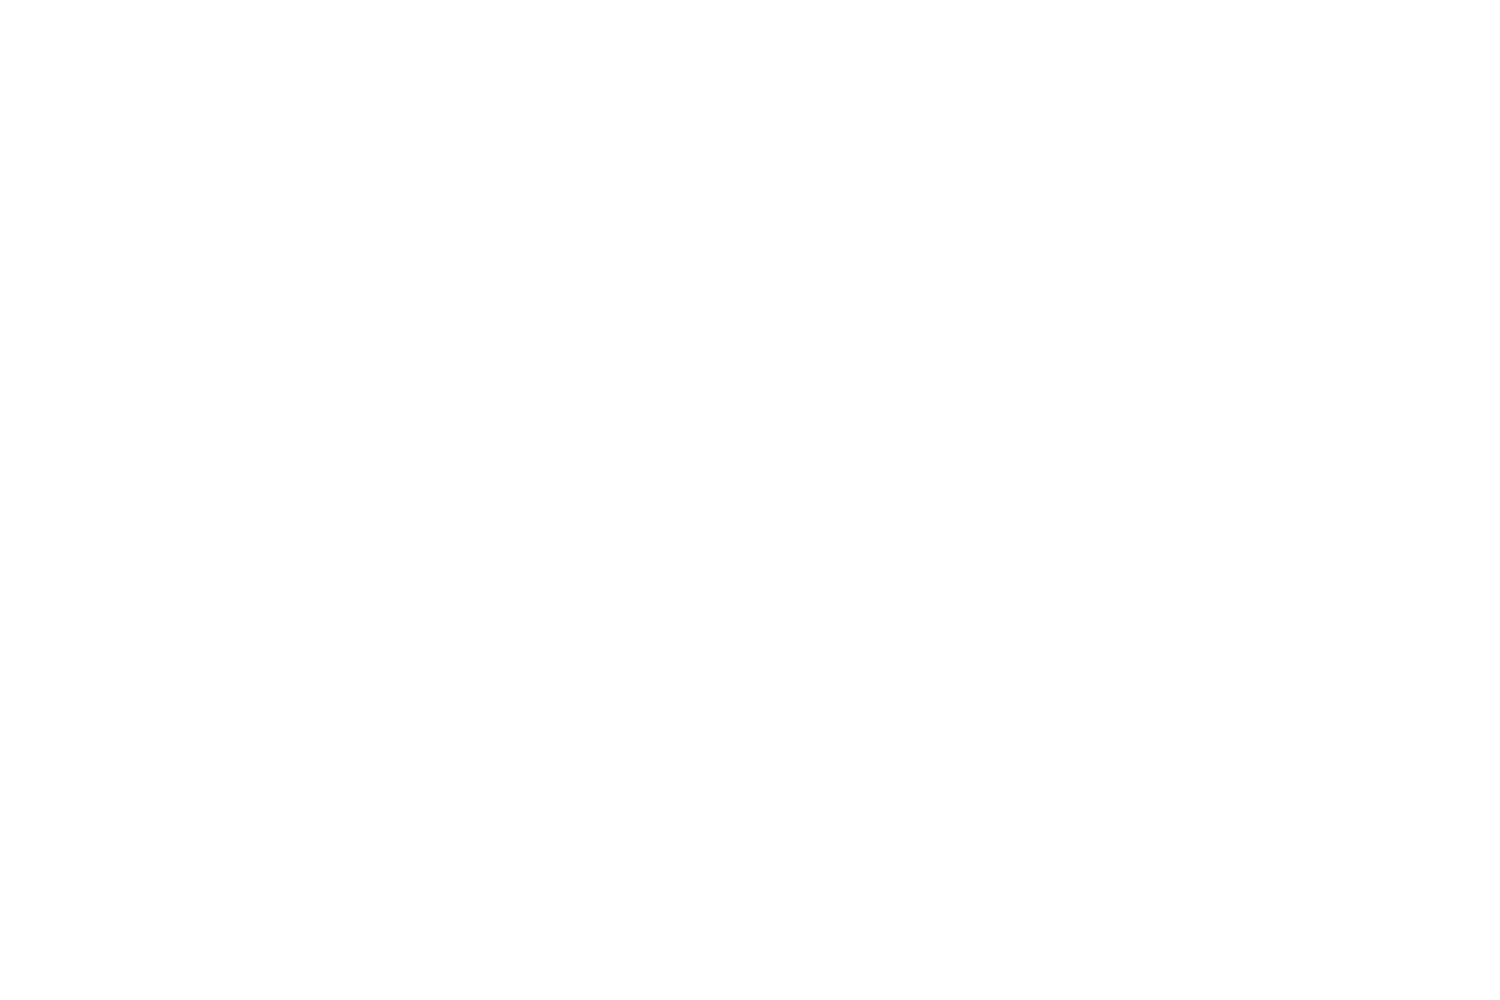 SAINT SAVANT Medical Aesthetics